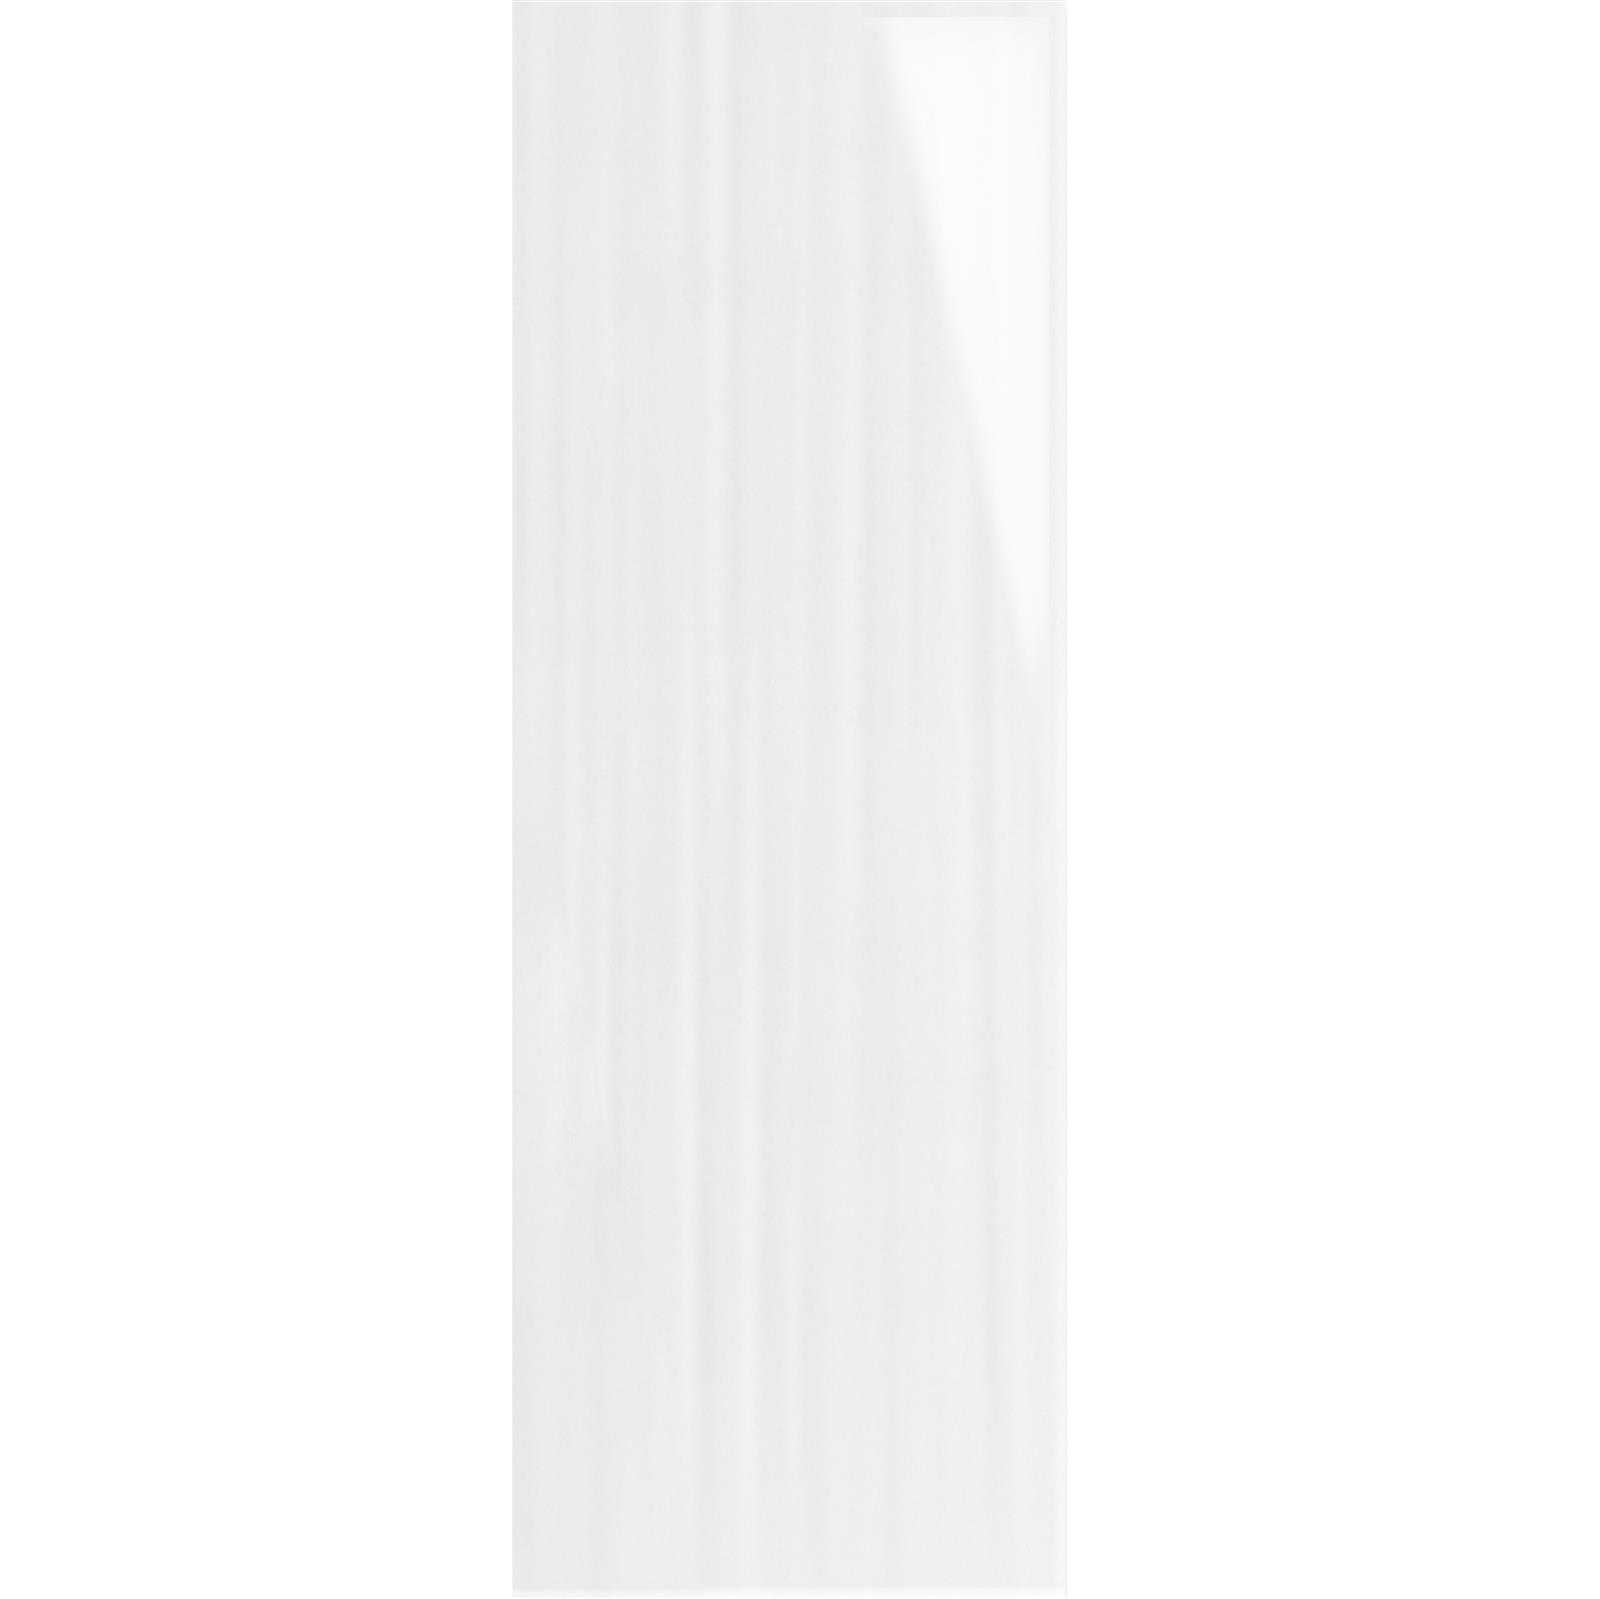 Wandfliesen Richard Welle 30x90cm Weiß Glänzend